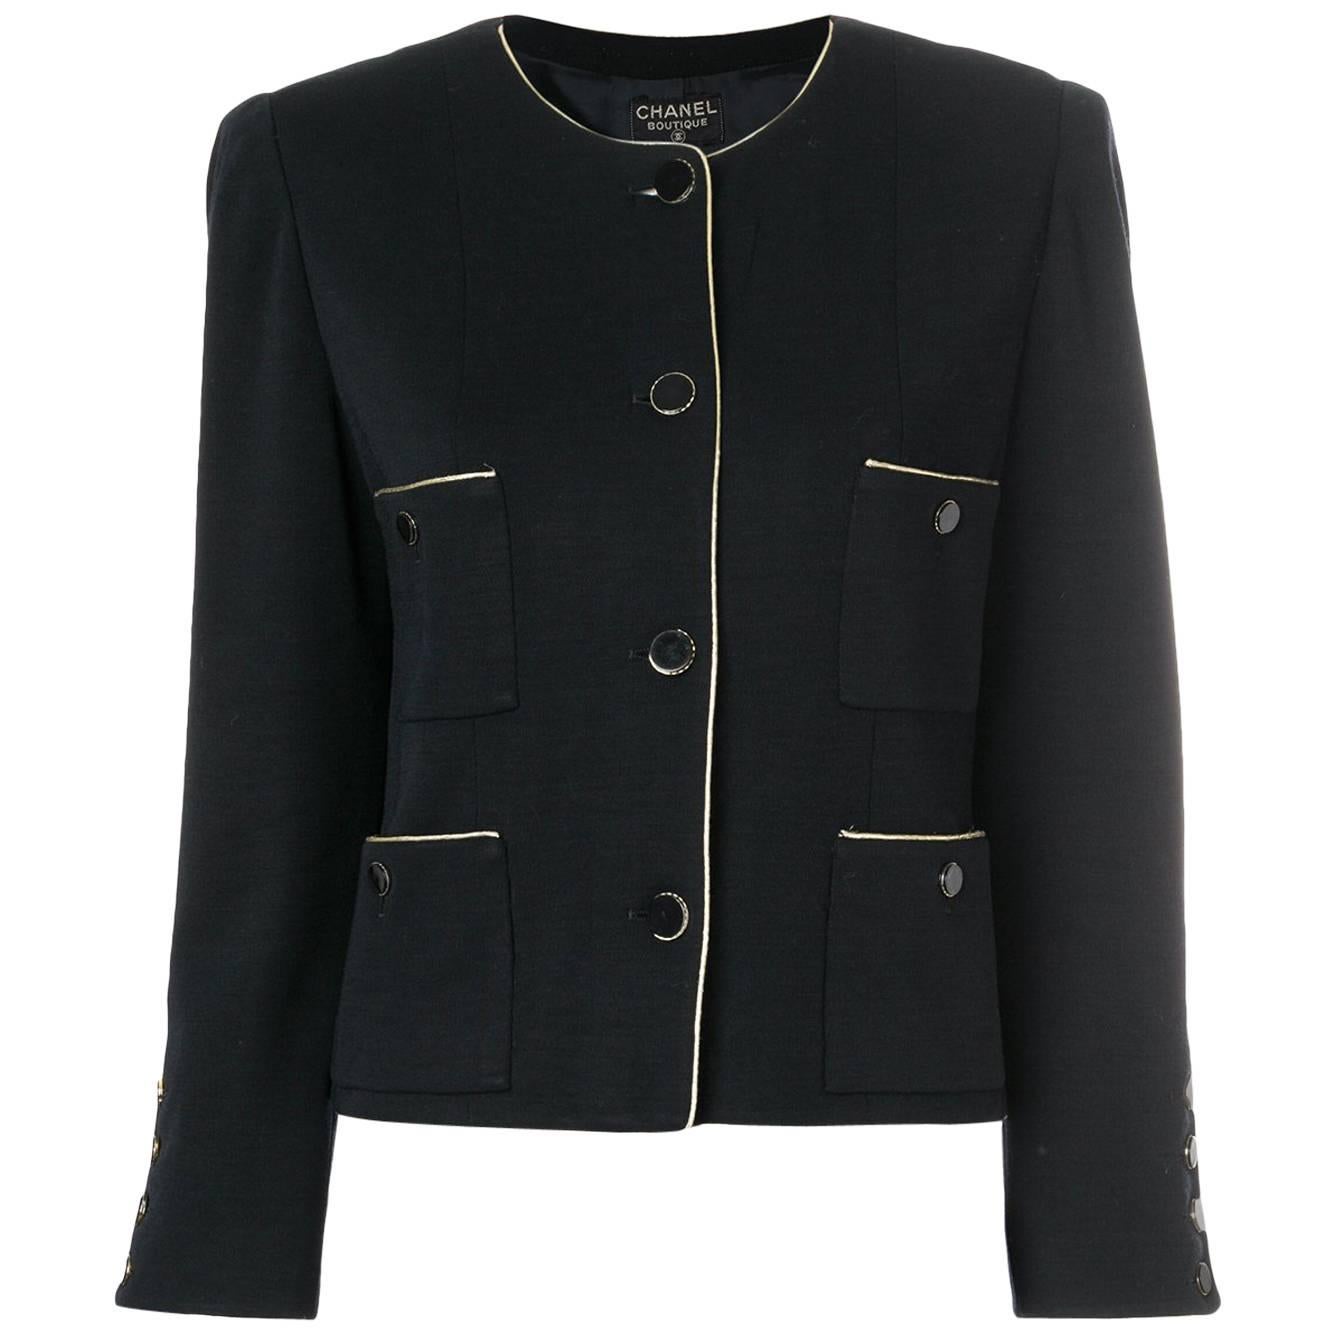 Chanel Black Collarless Boxy Jacket